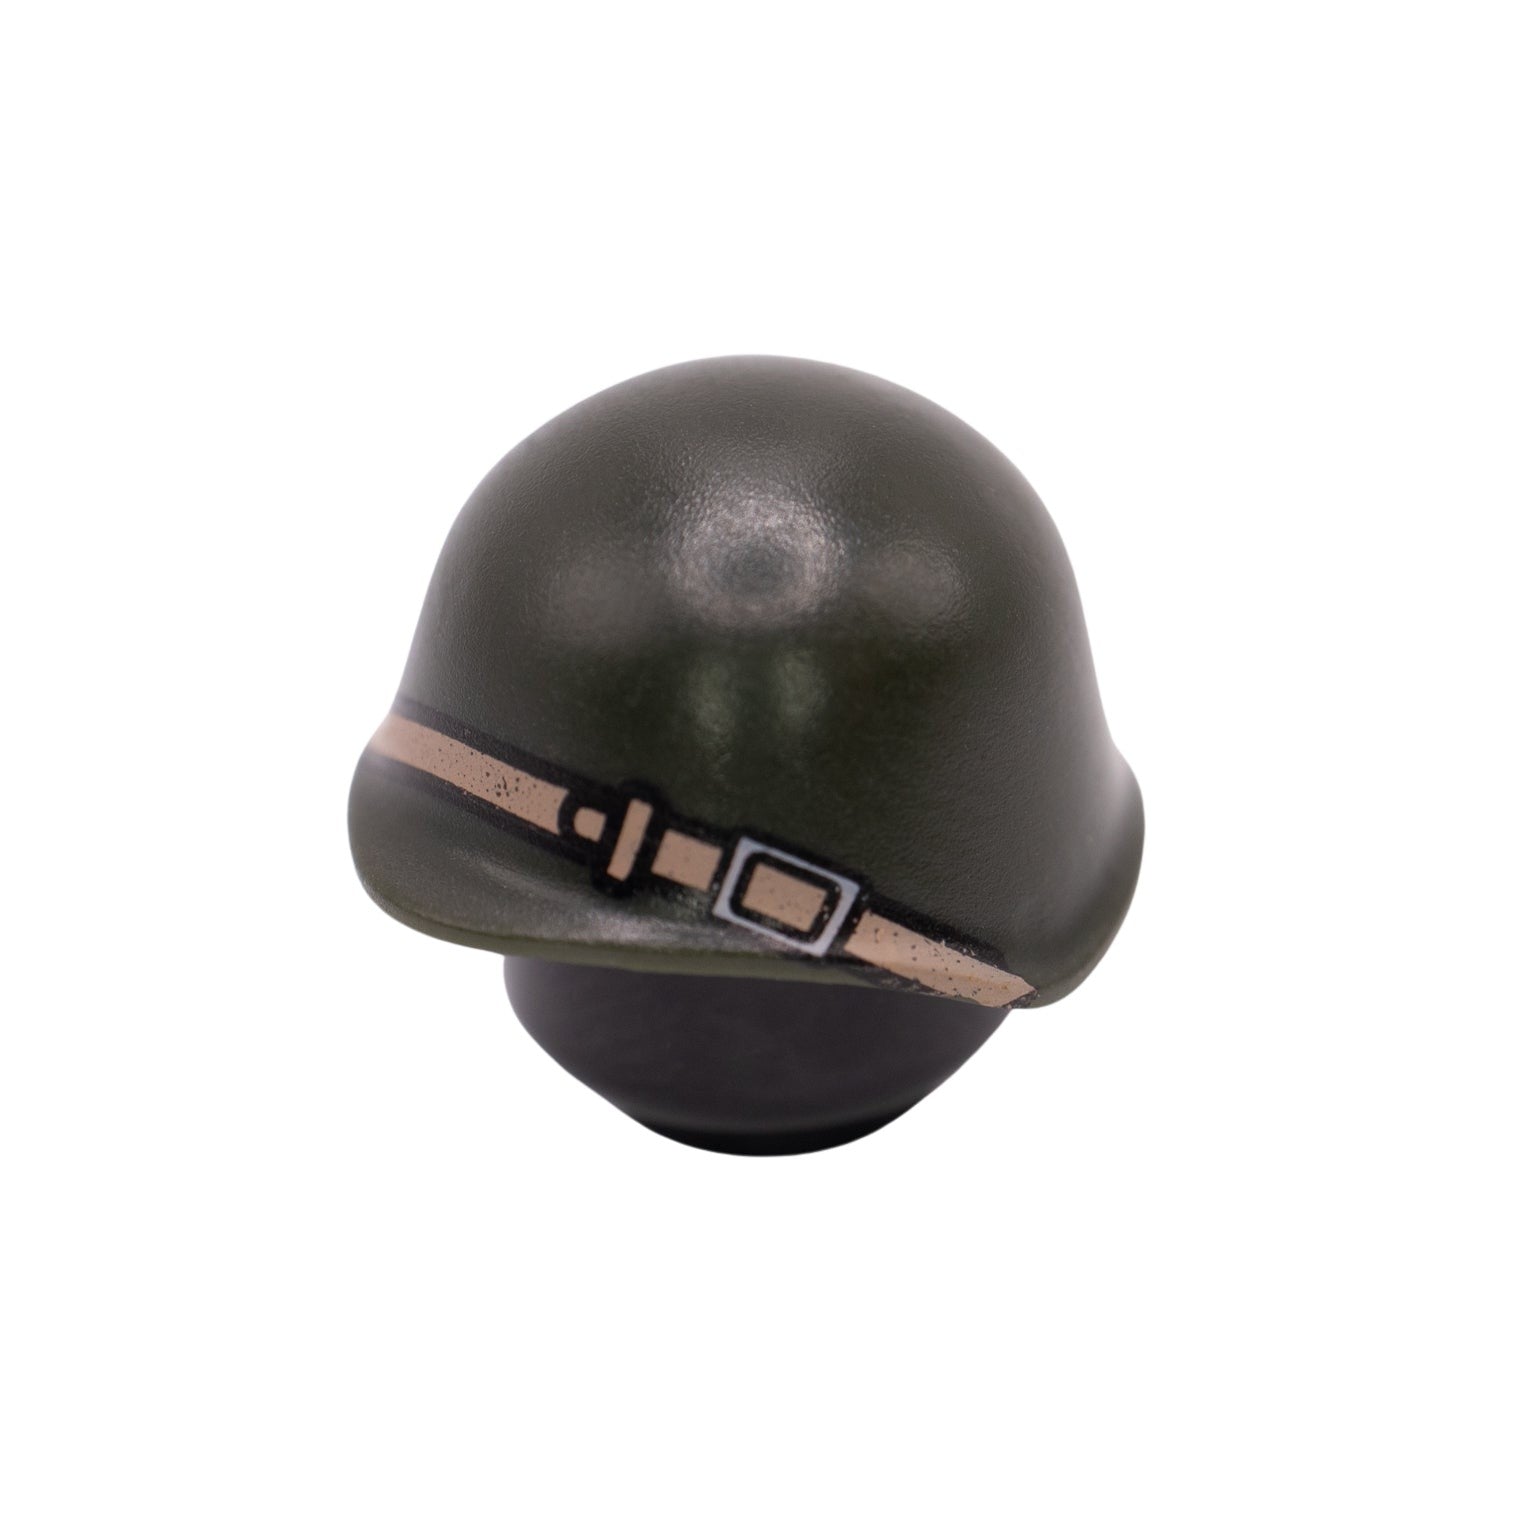 SSh-40 Helmet - Printed